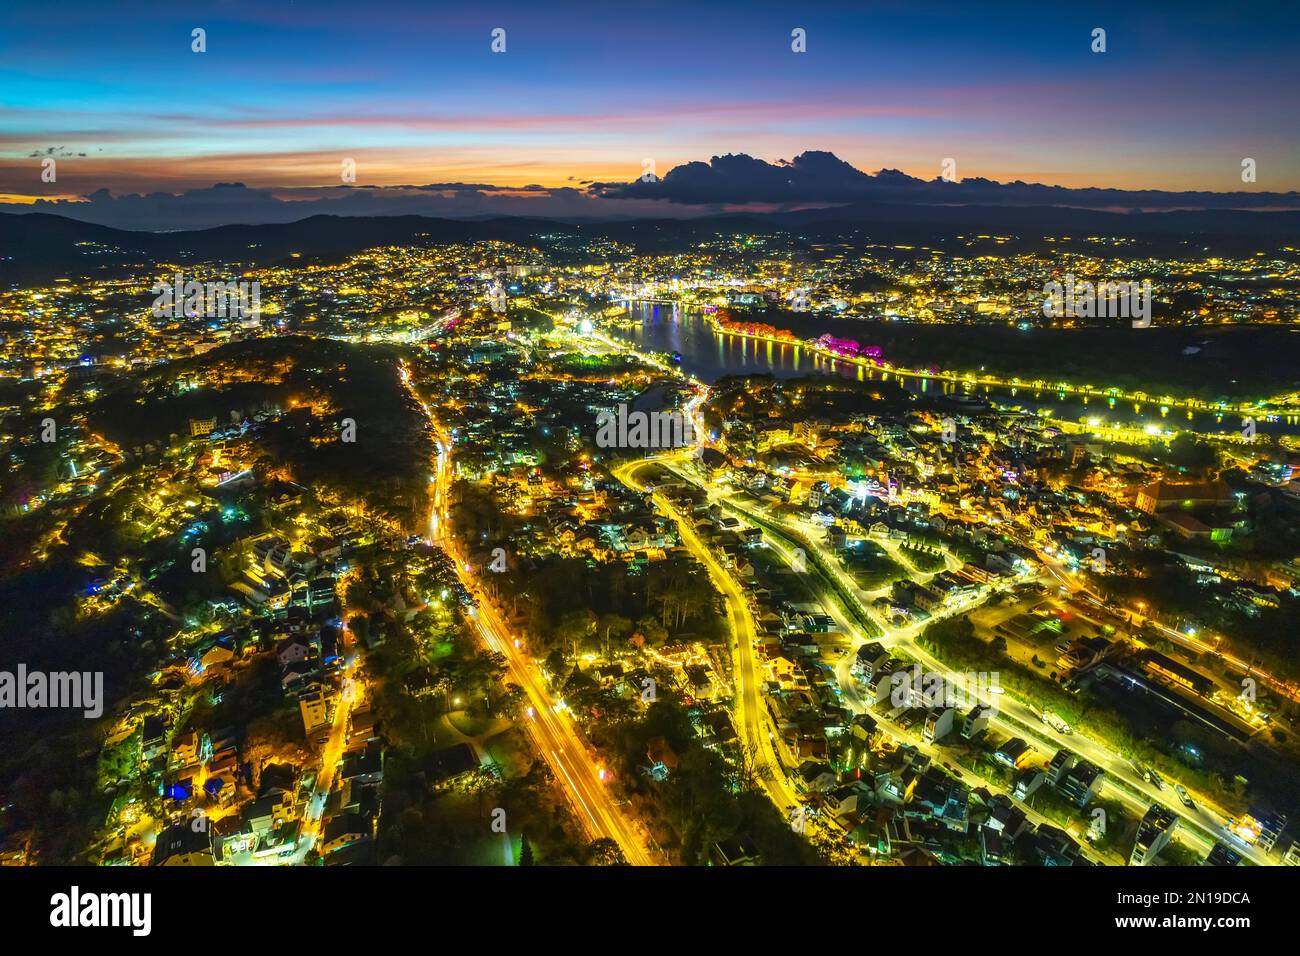 Aerial view of Da Lat city night sunset beautiful tourism destination in central highlands Vietnam. Urban development texture, green parks Stock Photo